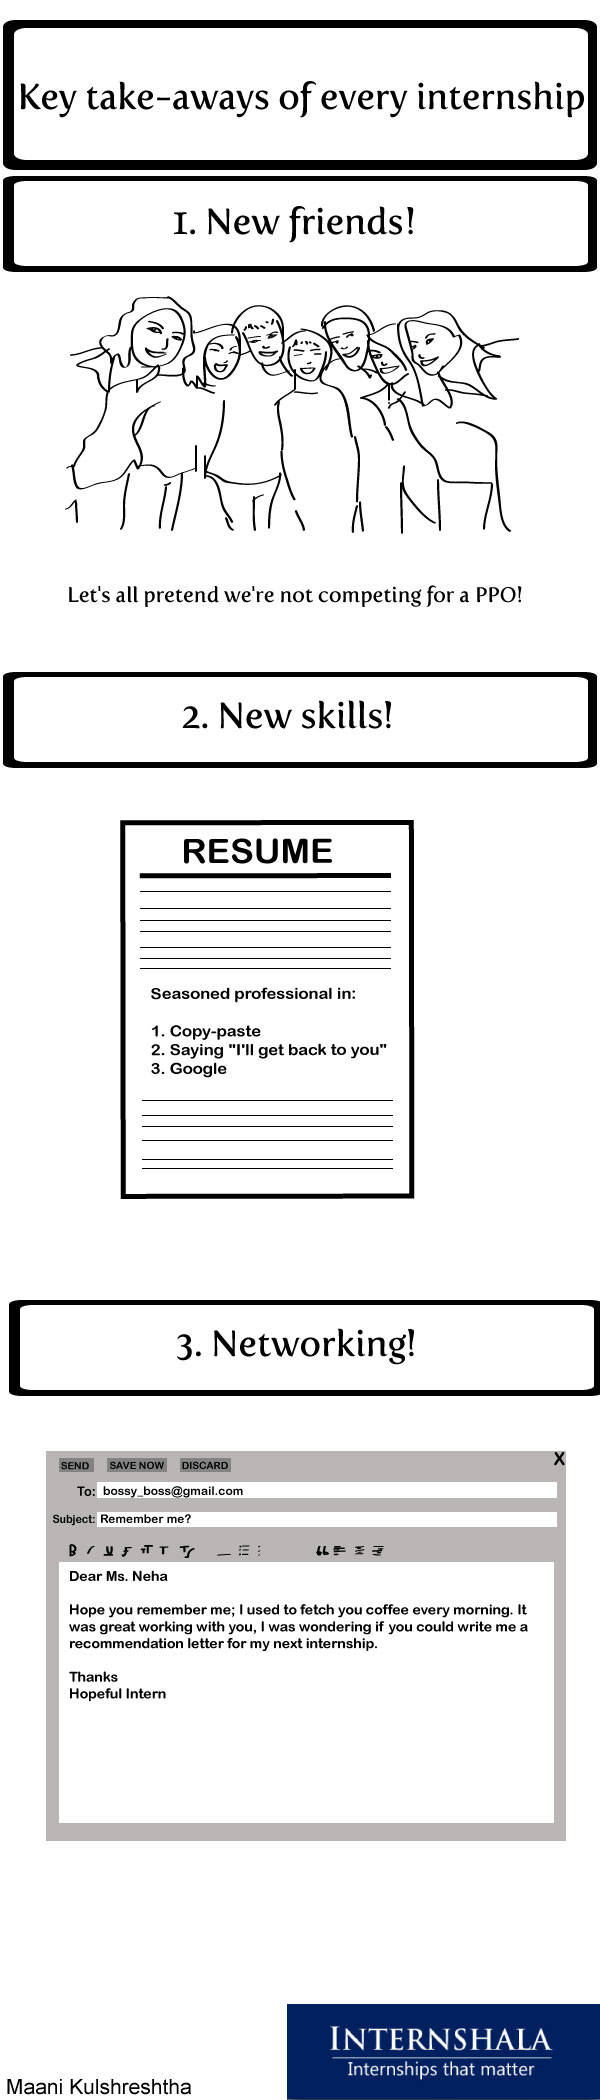 Key take-aways of every internship